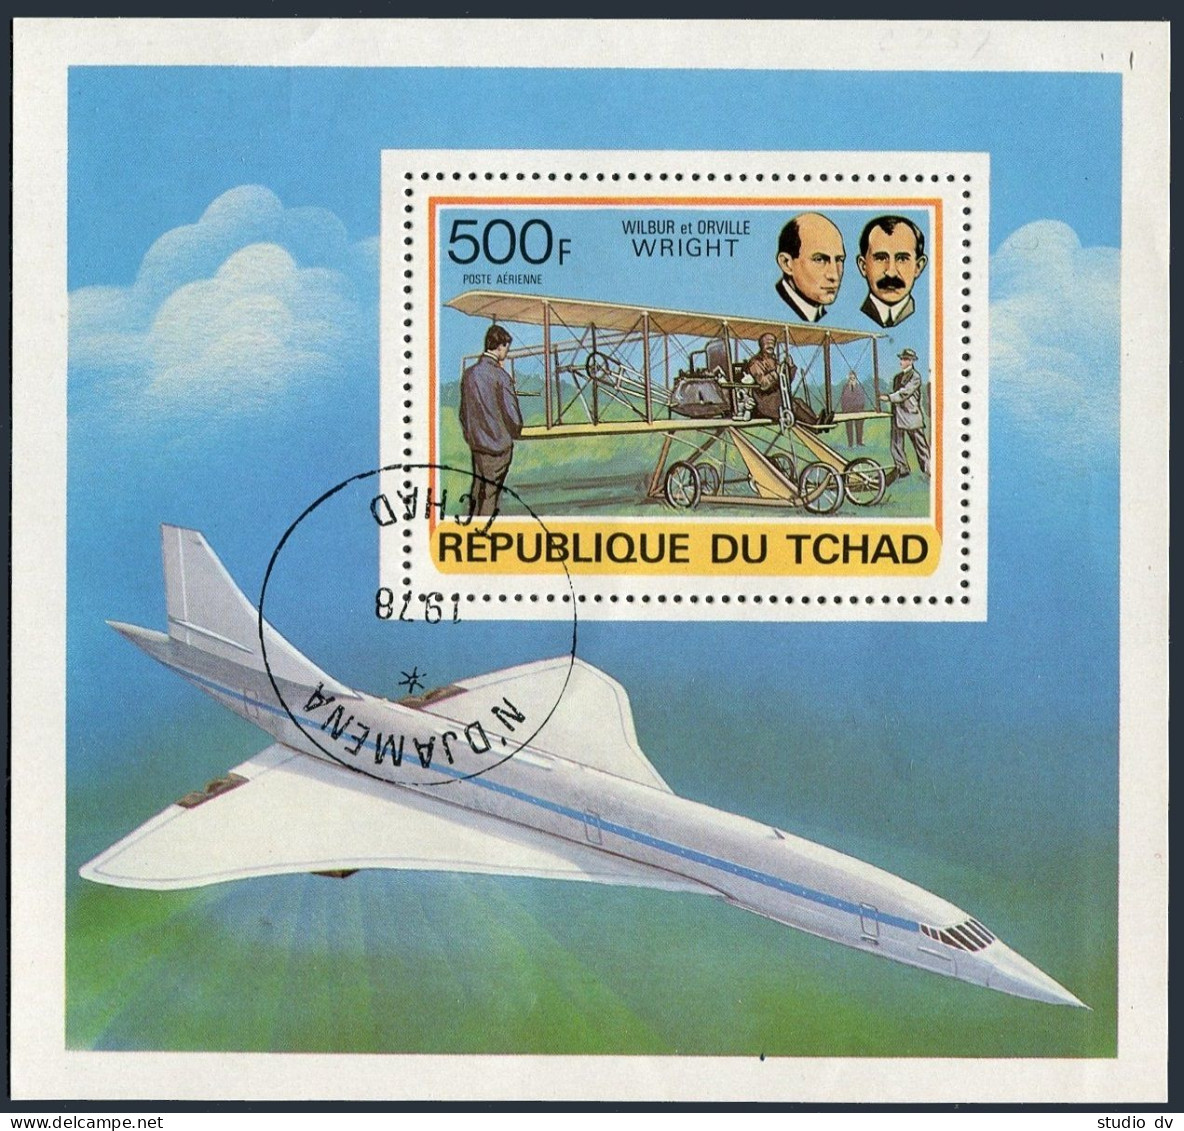 Chad C232-C236,C237,CTO.Michel 823-827,Bl.72. History Of Aviation,1978. - Chad (1960-...)